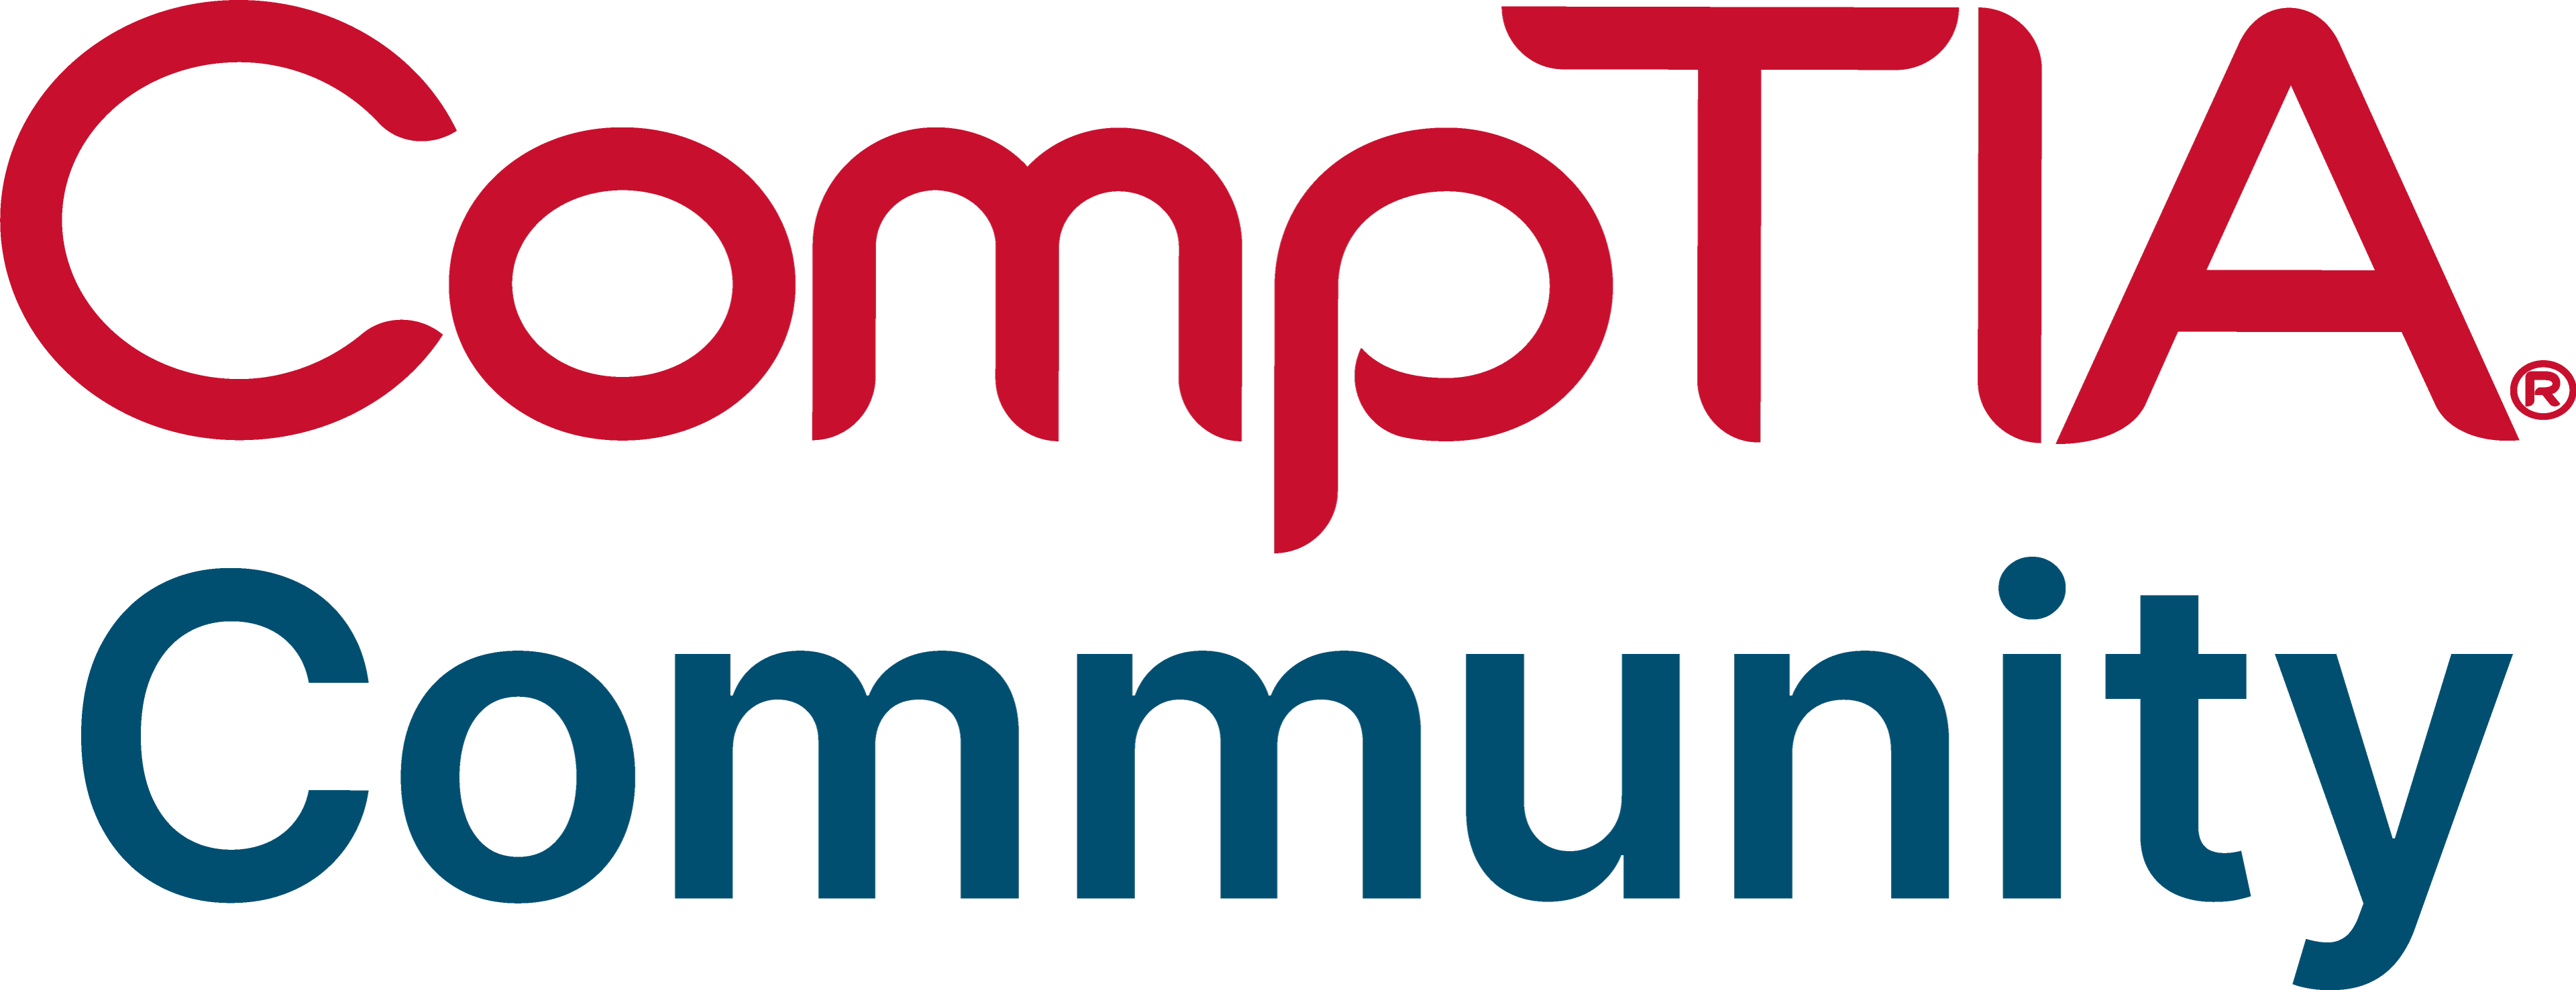 CompTIA Community